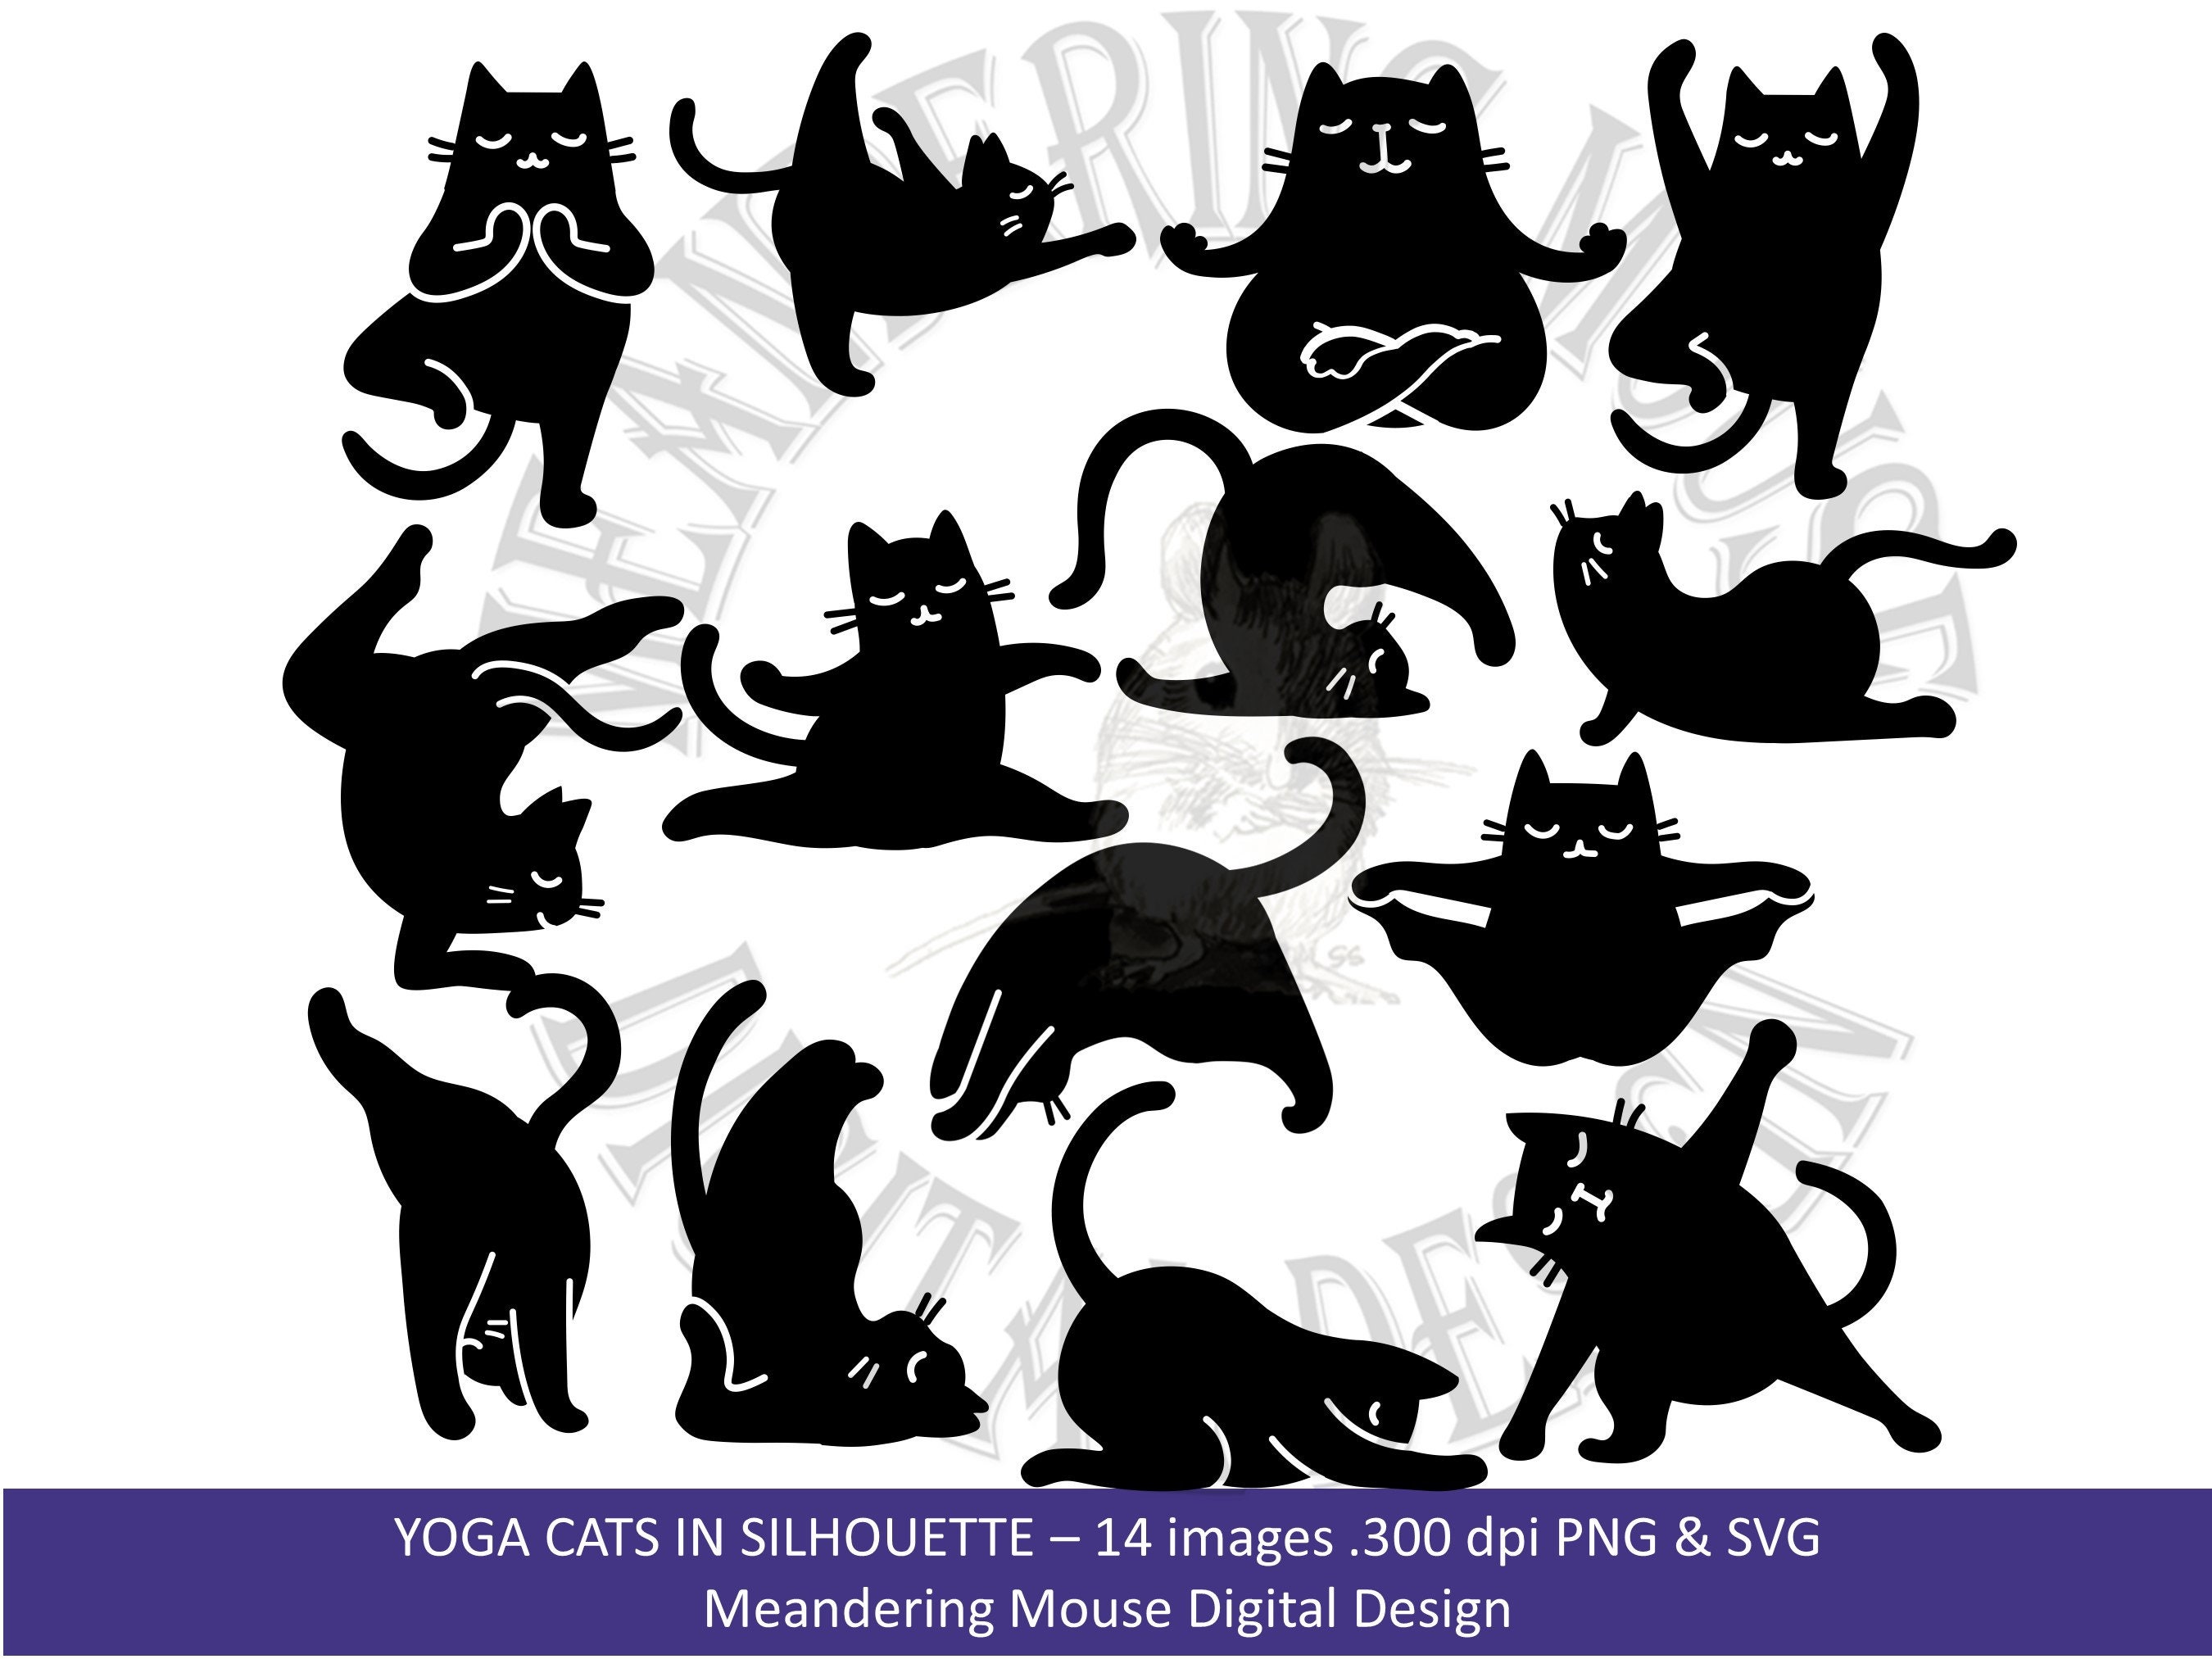 Retro Cat RUBBER STAMP, Black Cat Stamp, Cat Stamp, Halloween Stamp, Feline  Stamp, Cat Silhouette Stamp, Kitty Stamp, Cats Stamp, Kitty Cat